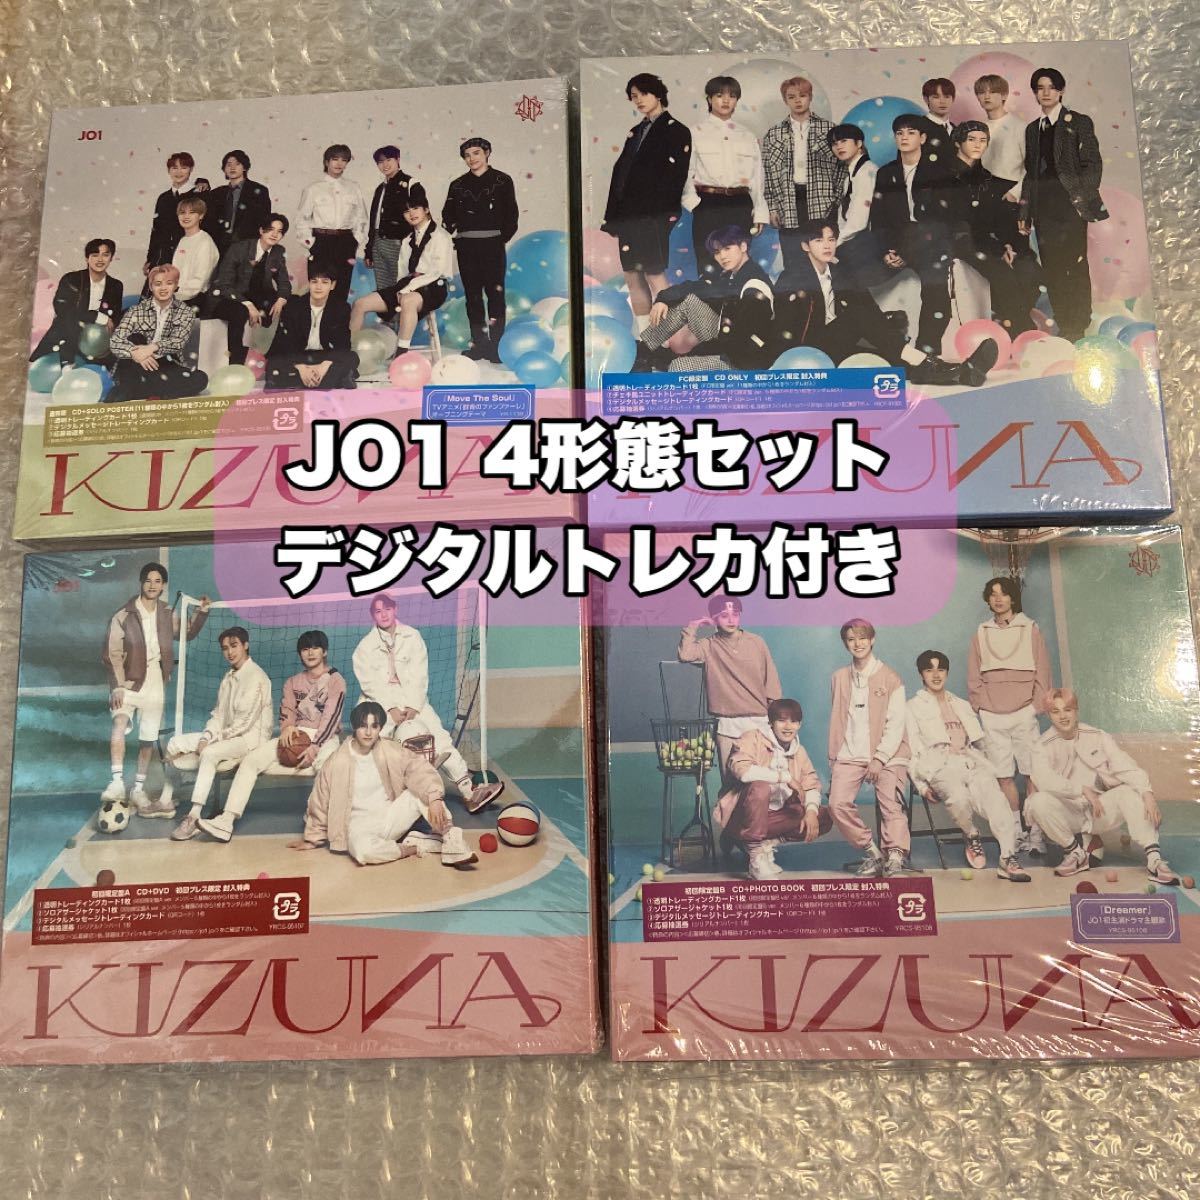 JO1 CD DVD アルバム KIZUNA FC 初回盤 通常盤 4形態セット｜PayPayフリマ